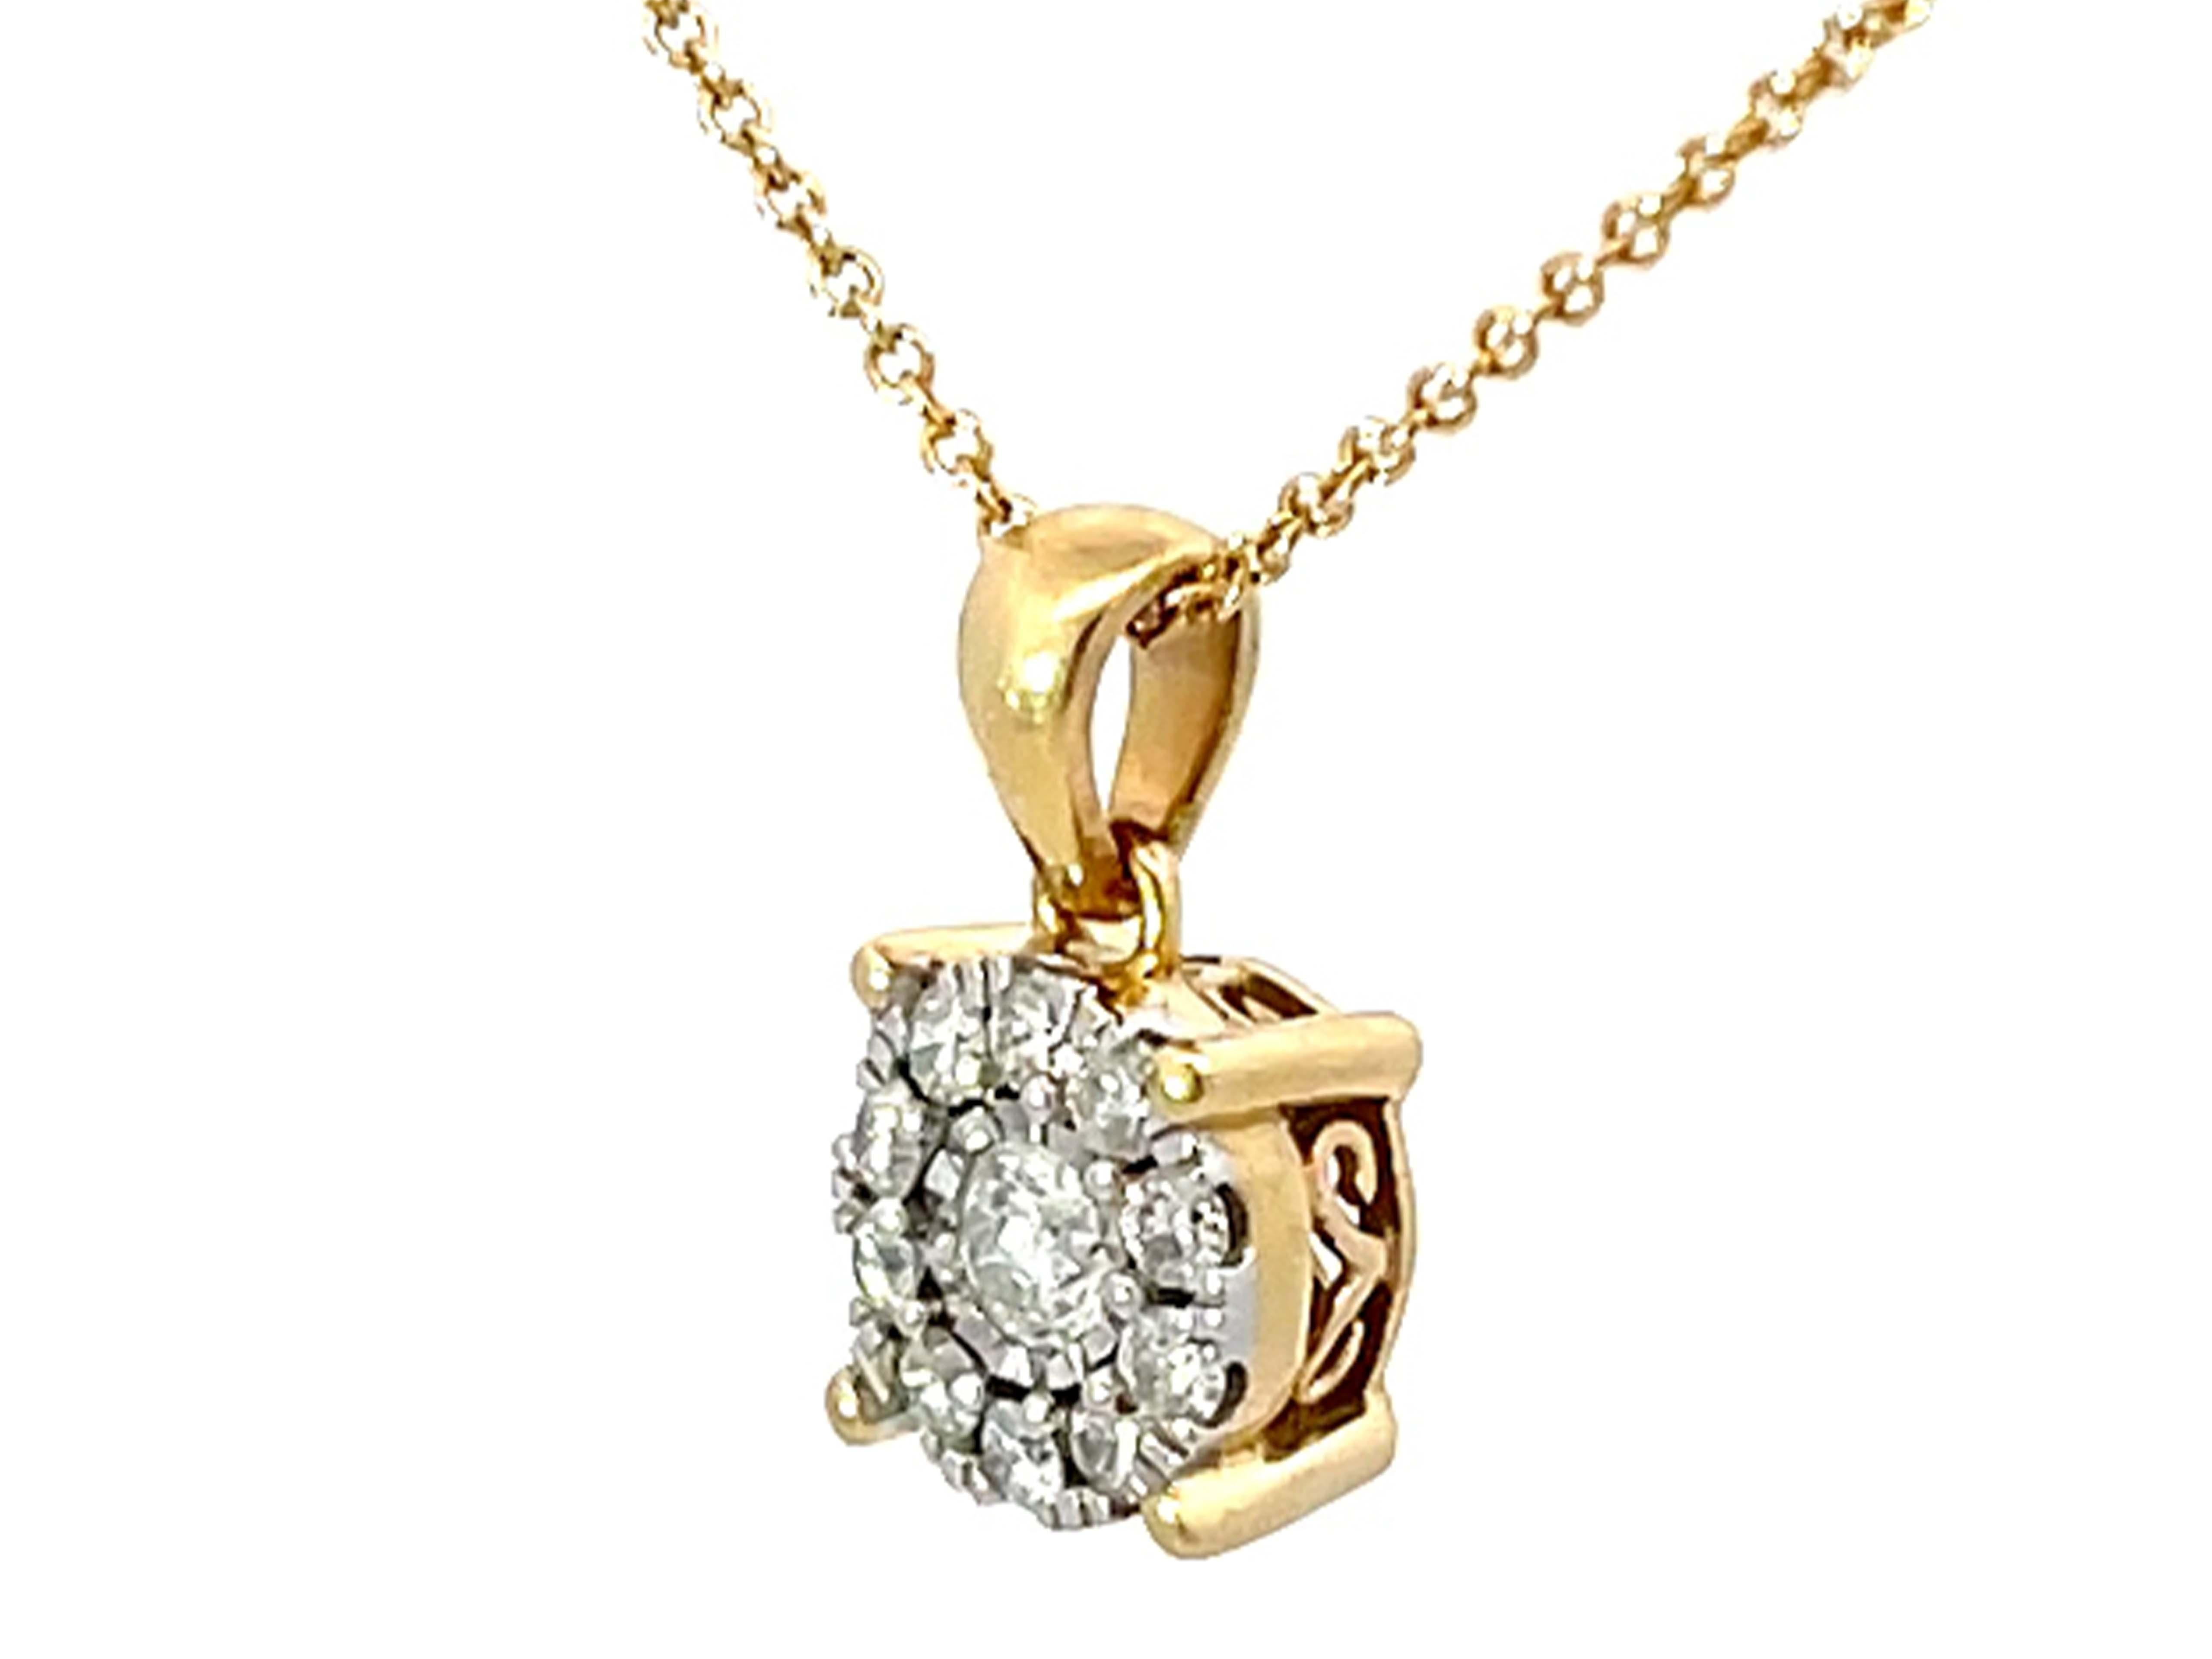 Brilliant Cut Solid Gold Diamond Halo Pendant Necklace For Sale